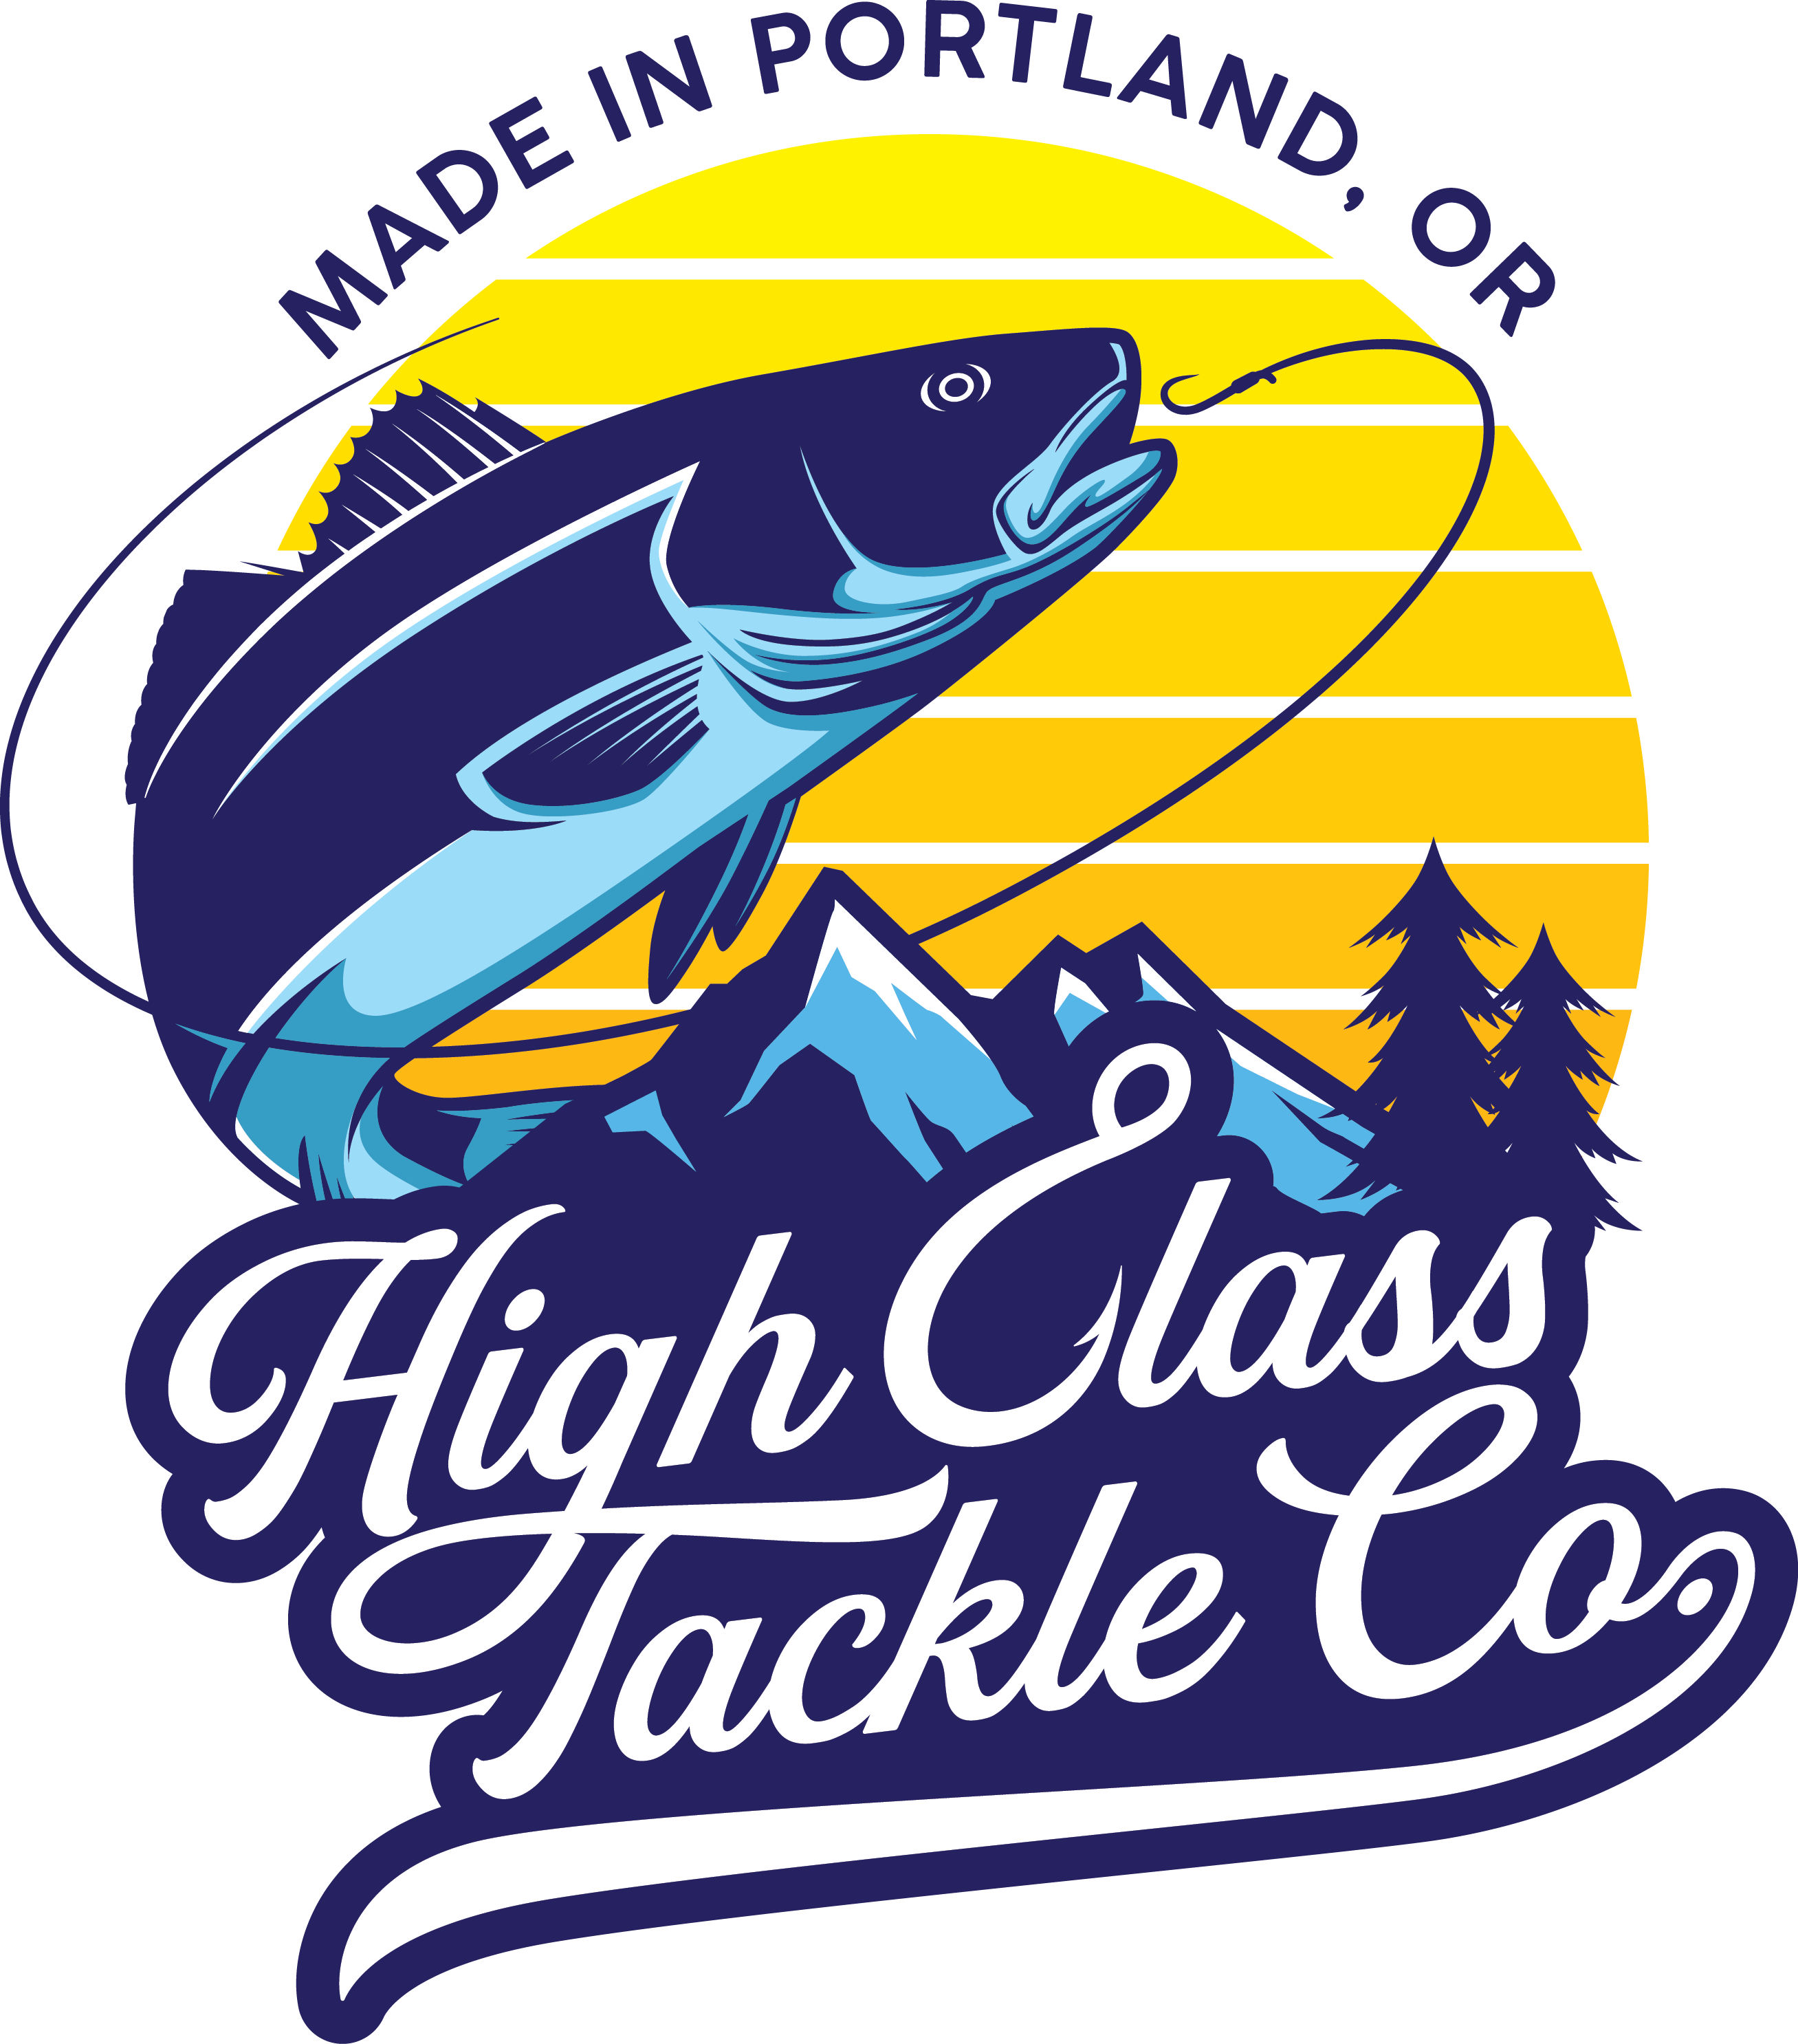 High Class Tackle Co logo